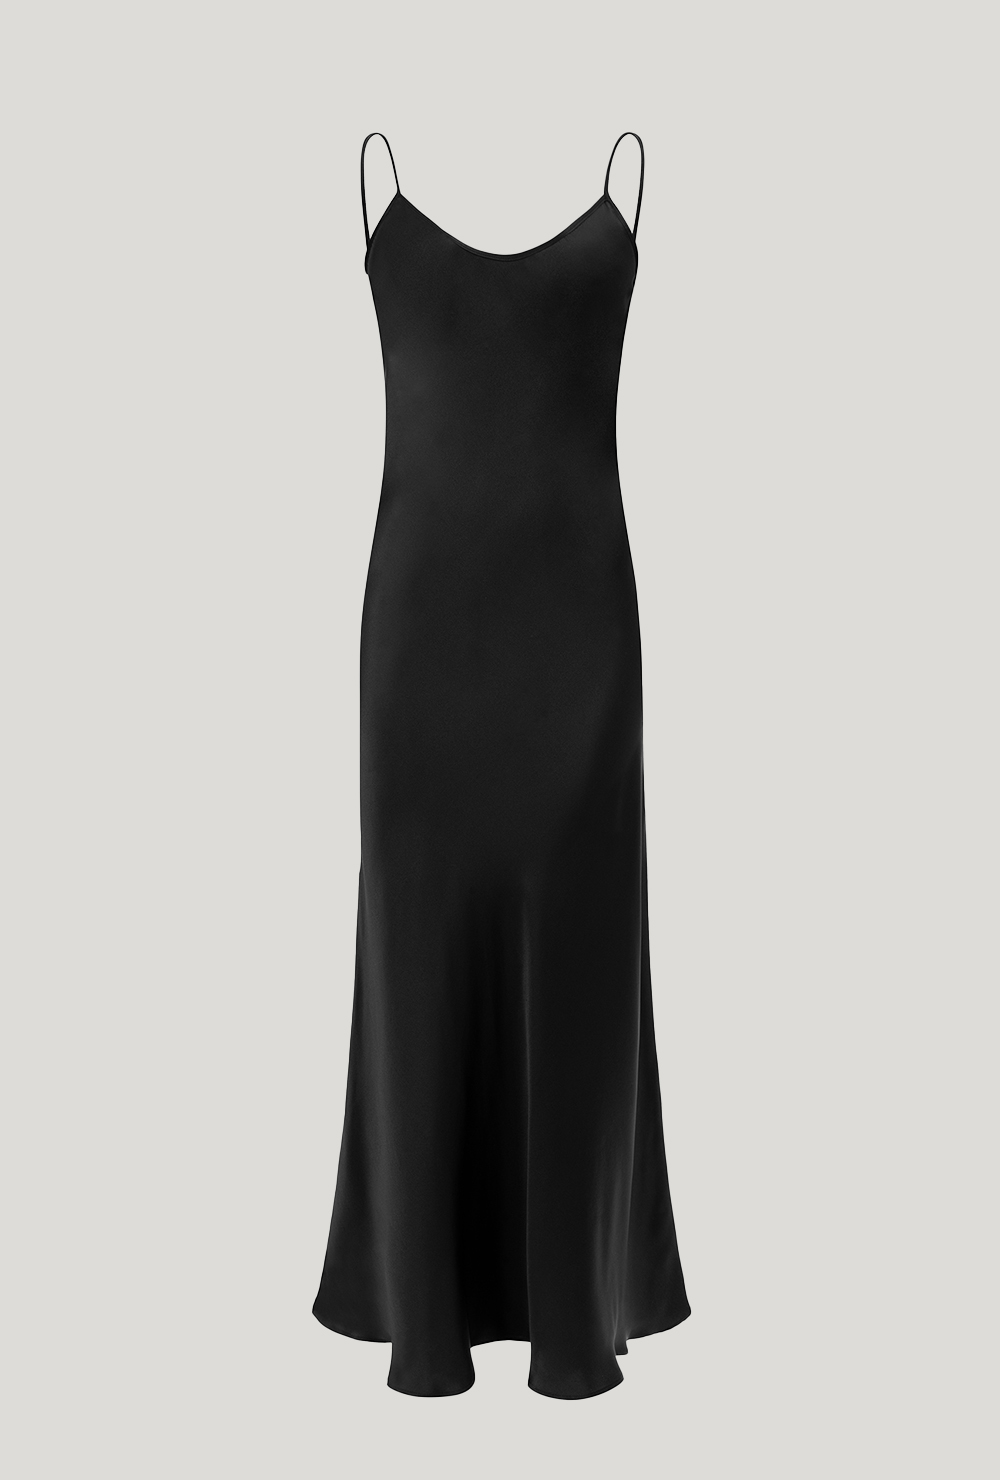 Silk maxi black dress with